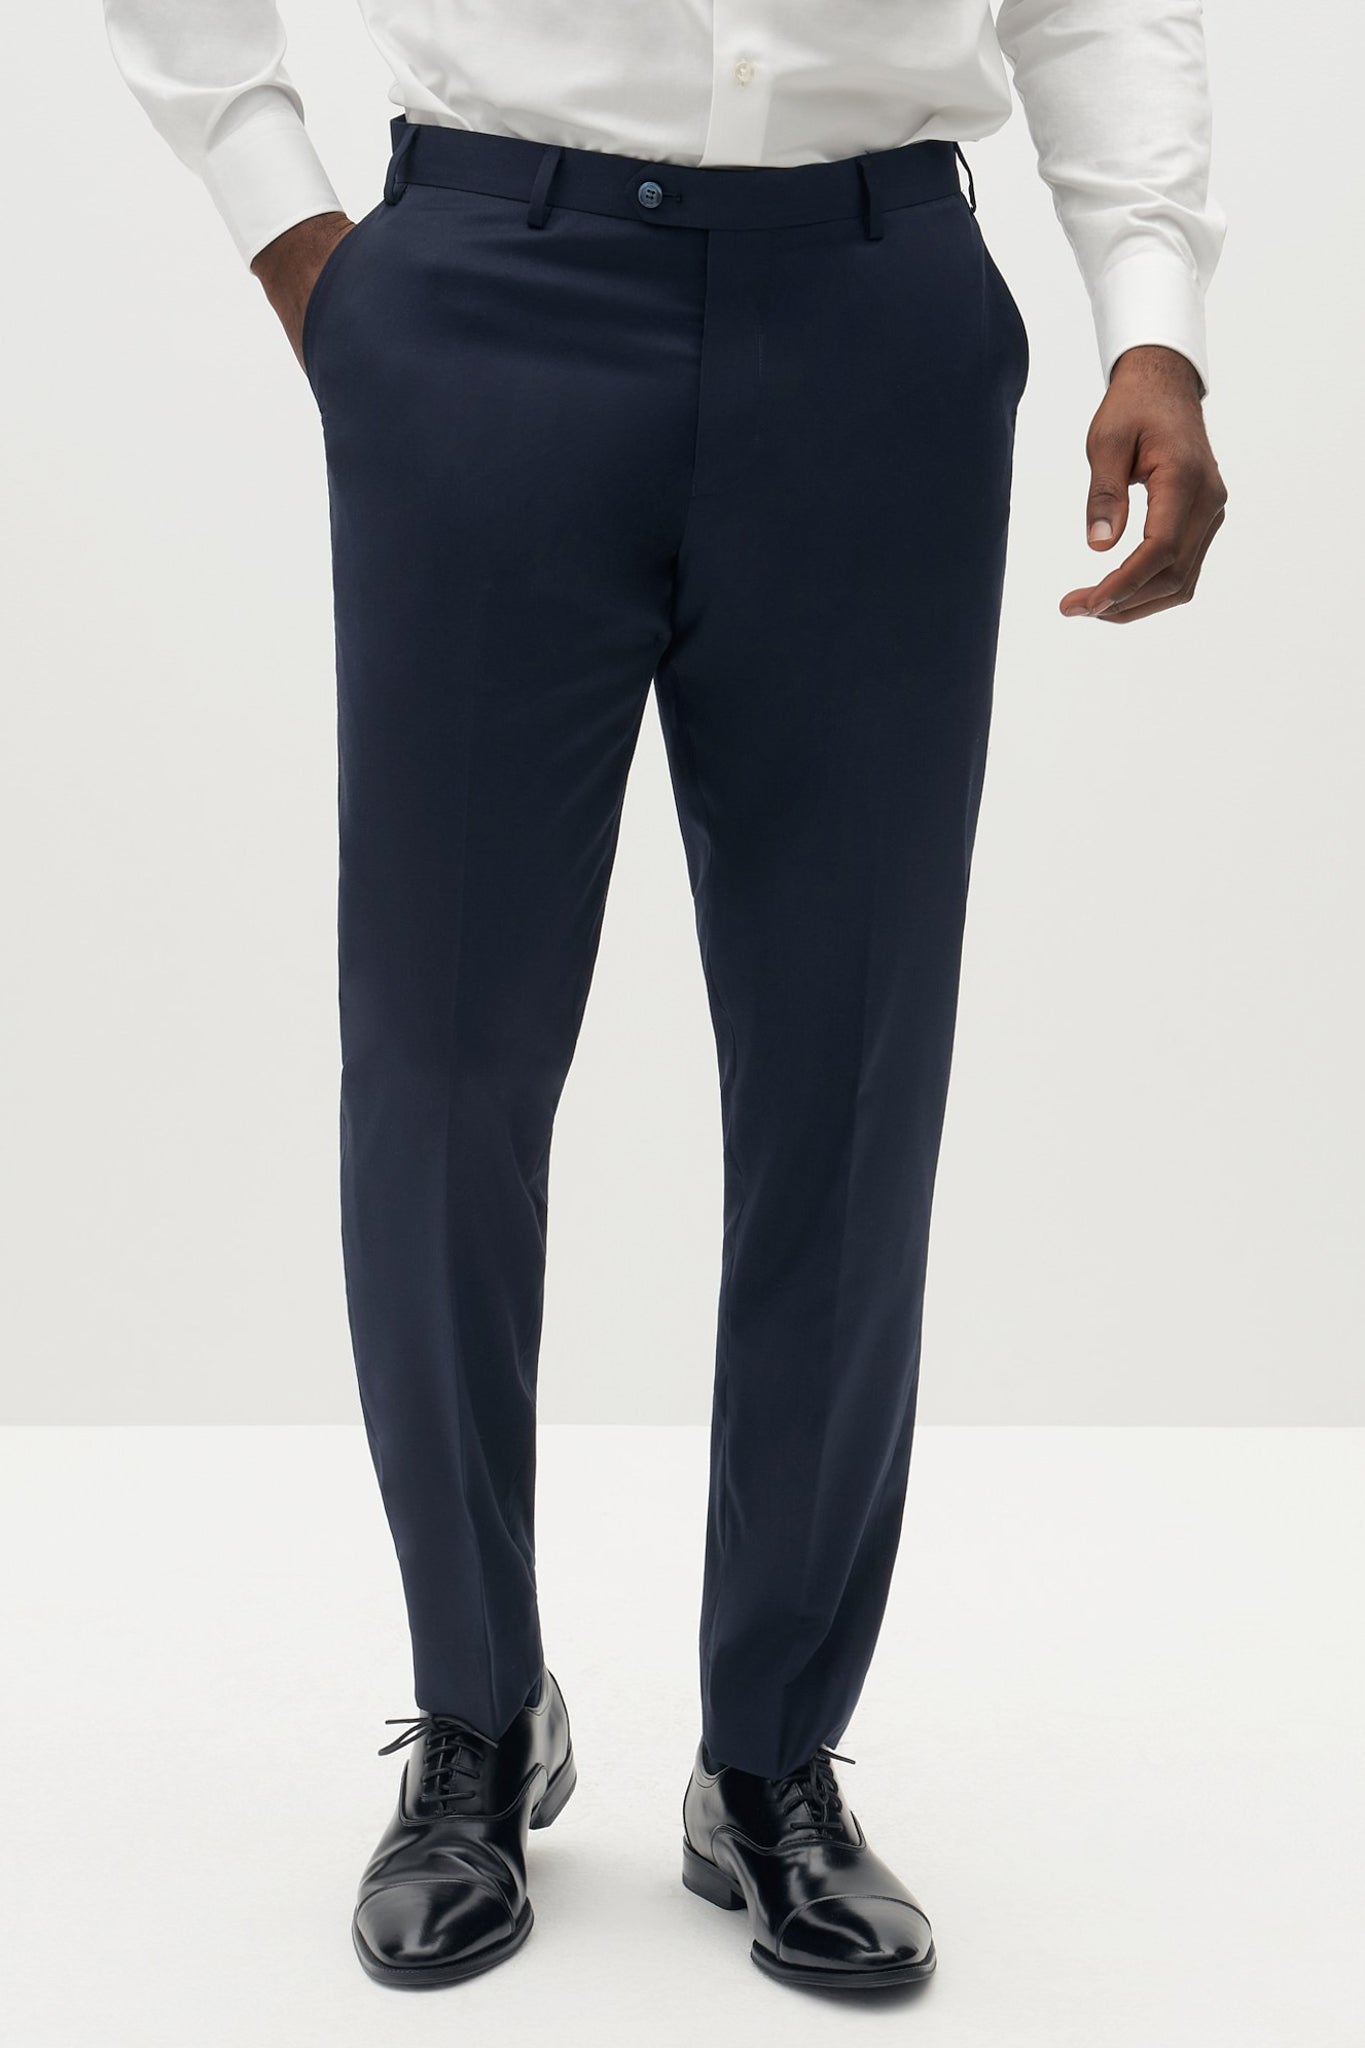 Navy Blue Groomsmen Suit Pants by SuitShop, front view